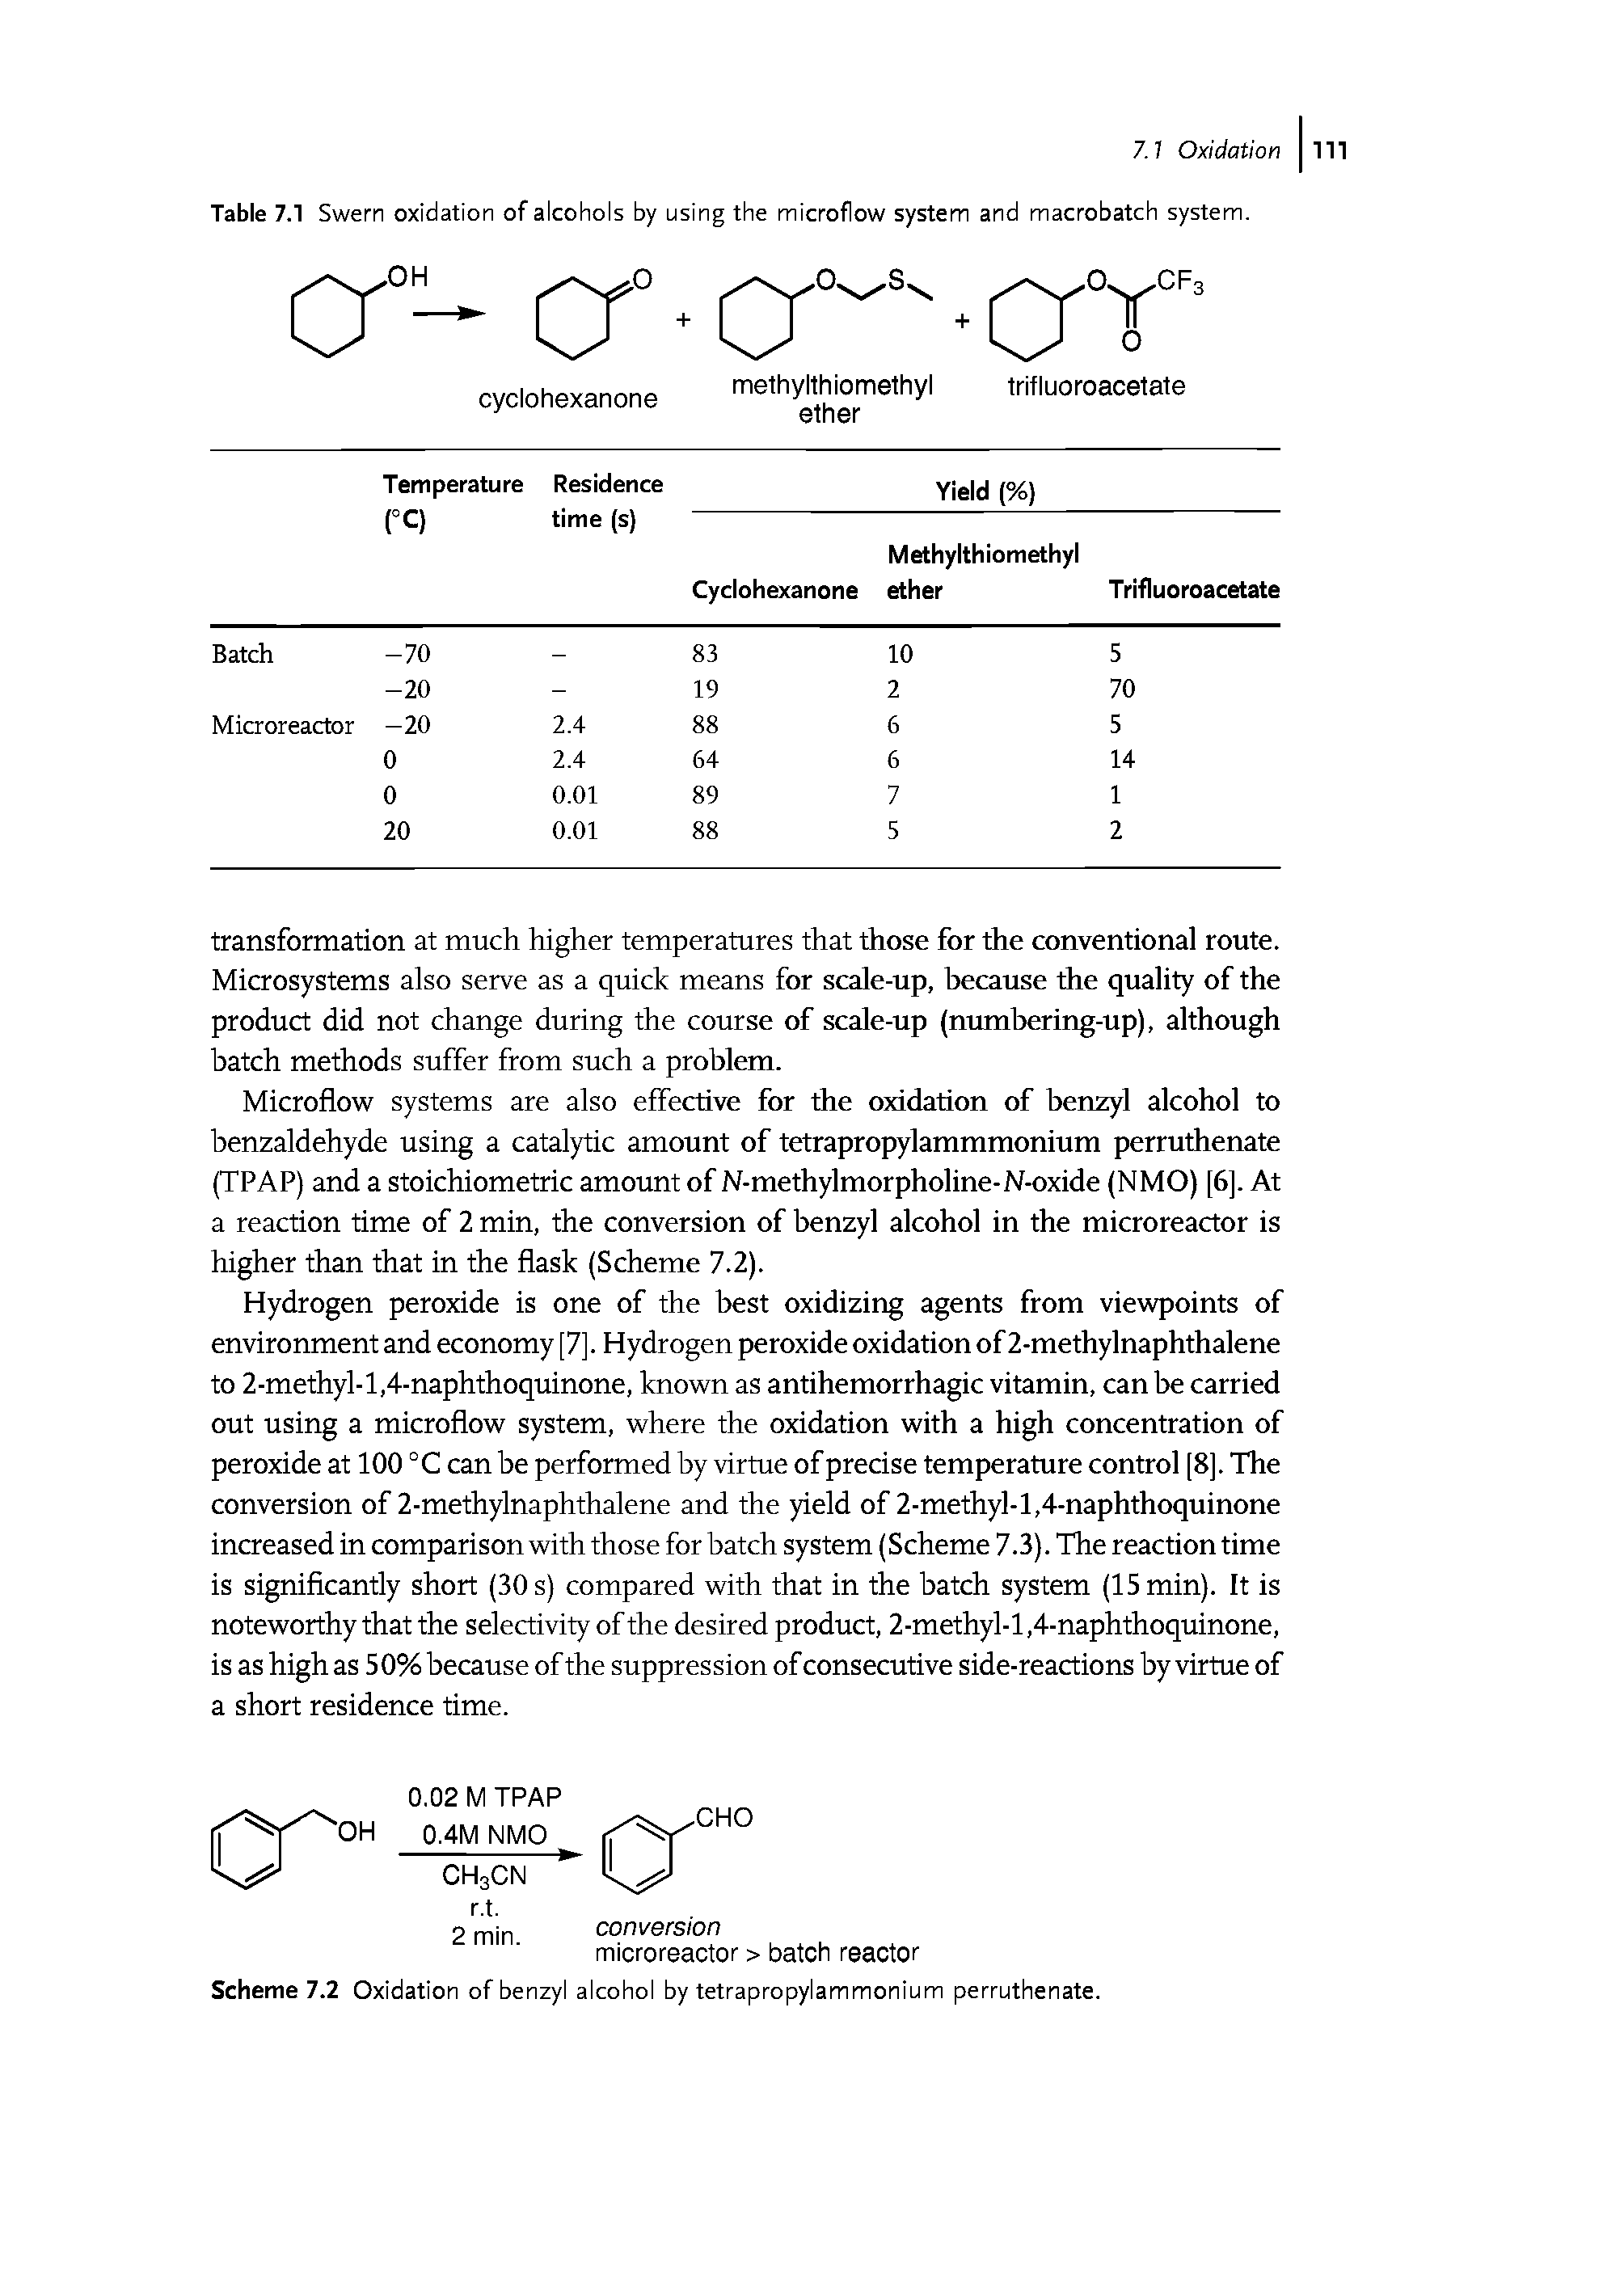 Scheme 7.2 Oxidation of benzyl alcohol by tetrapropylammonium perruthenate.